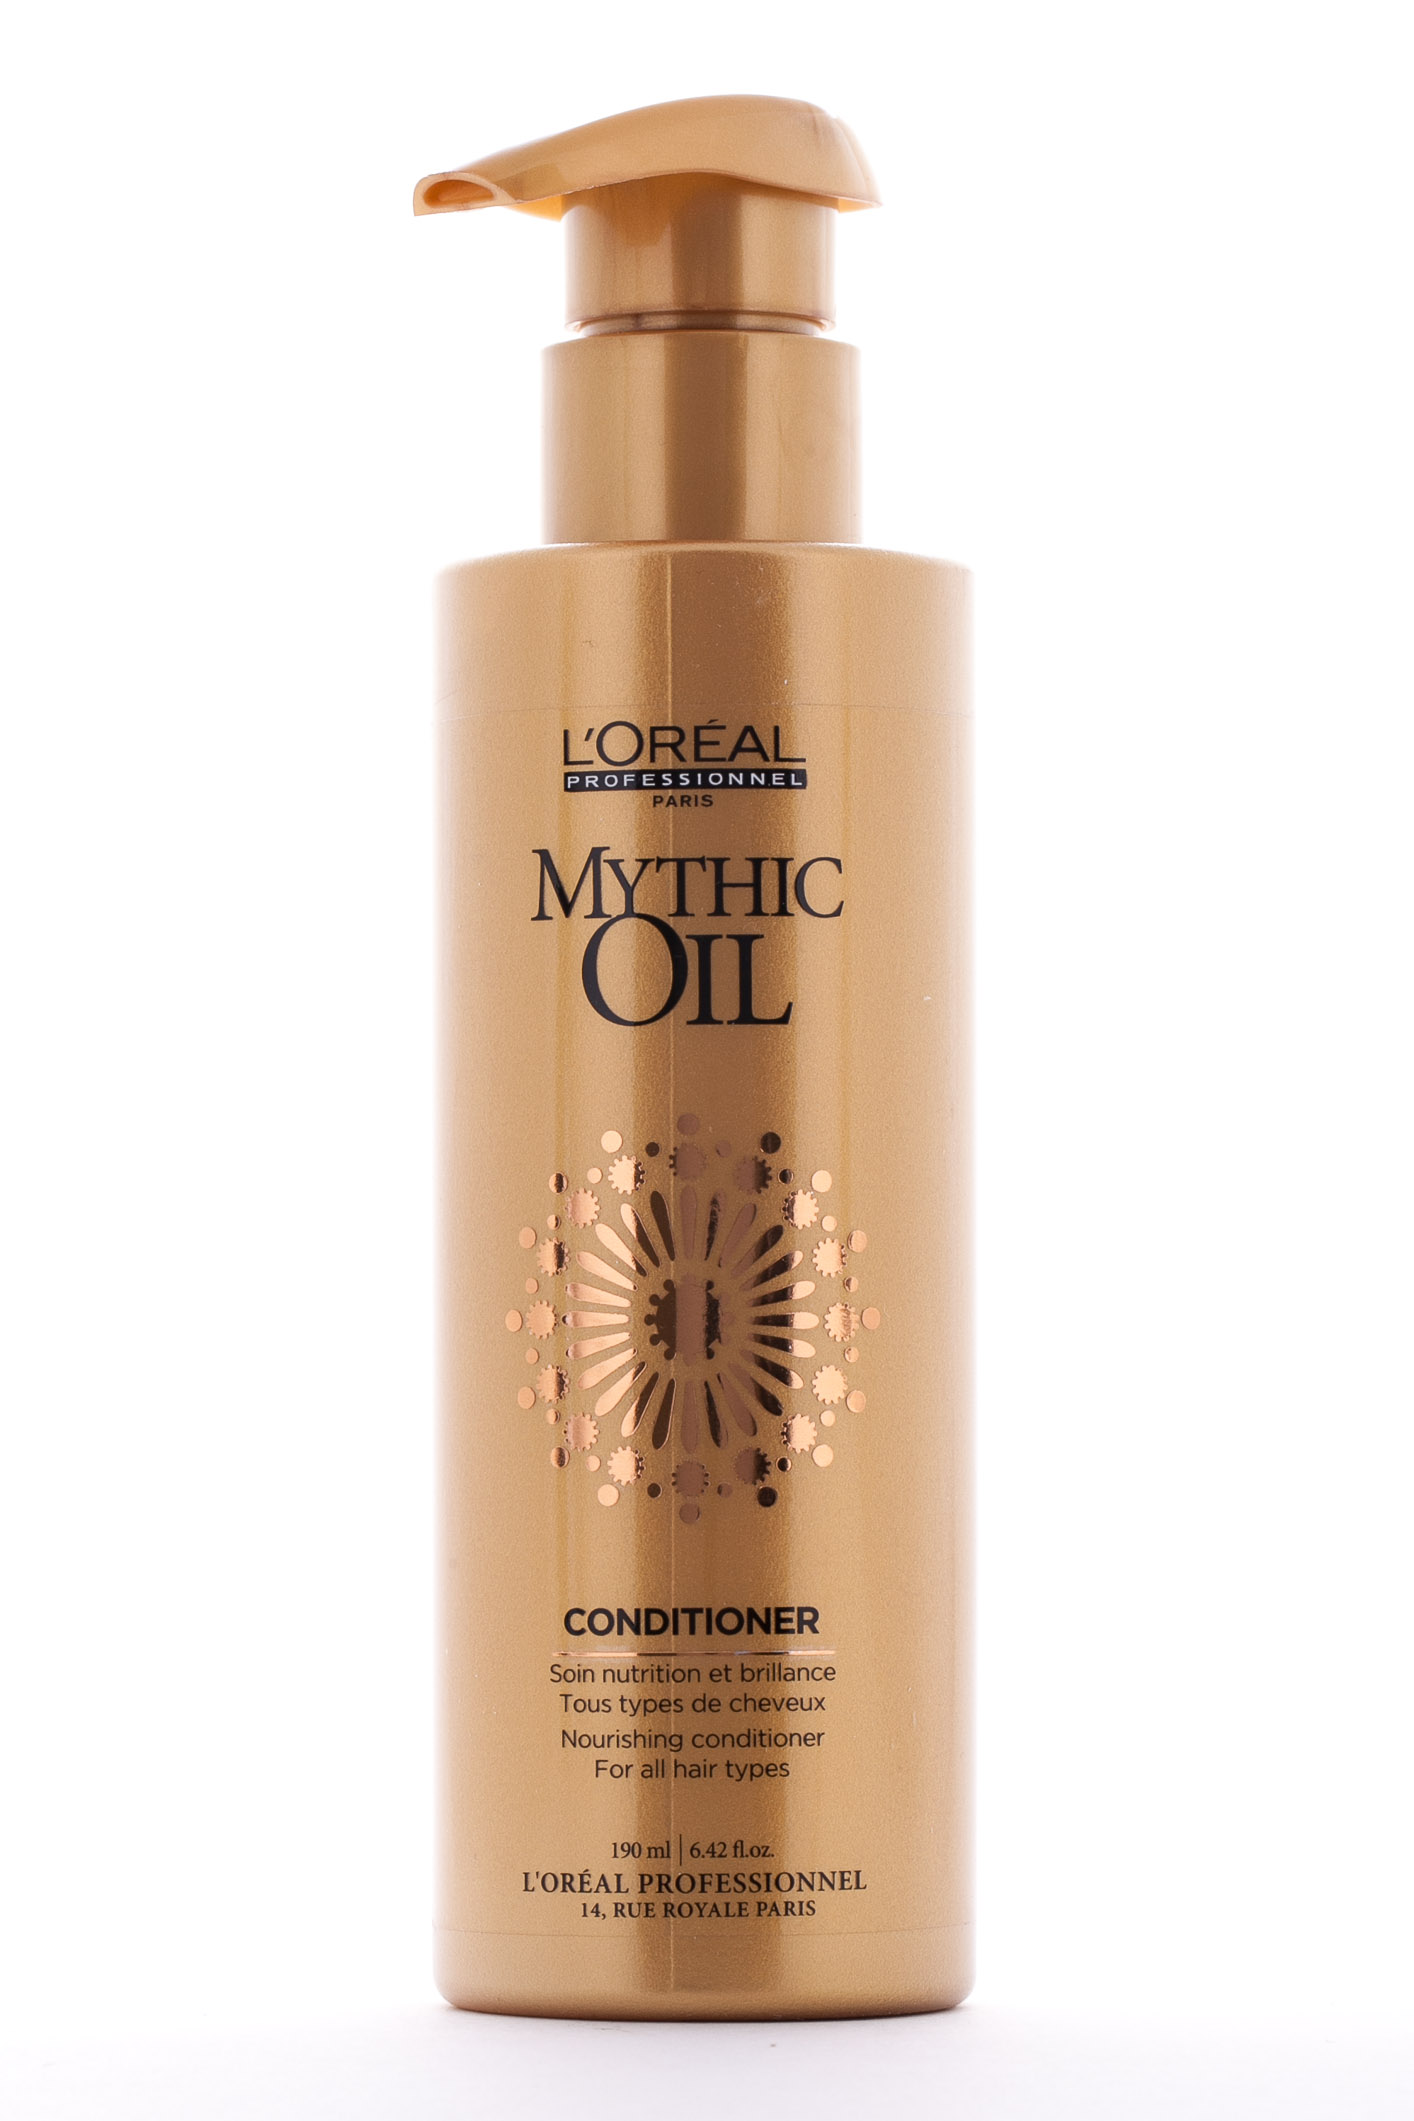 Mythic oil смываемый уход для всех типов волос 190 мл